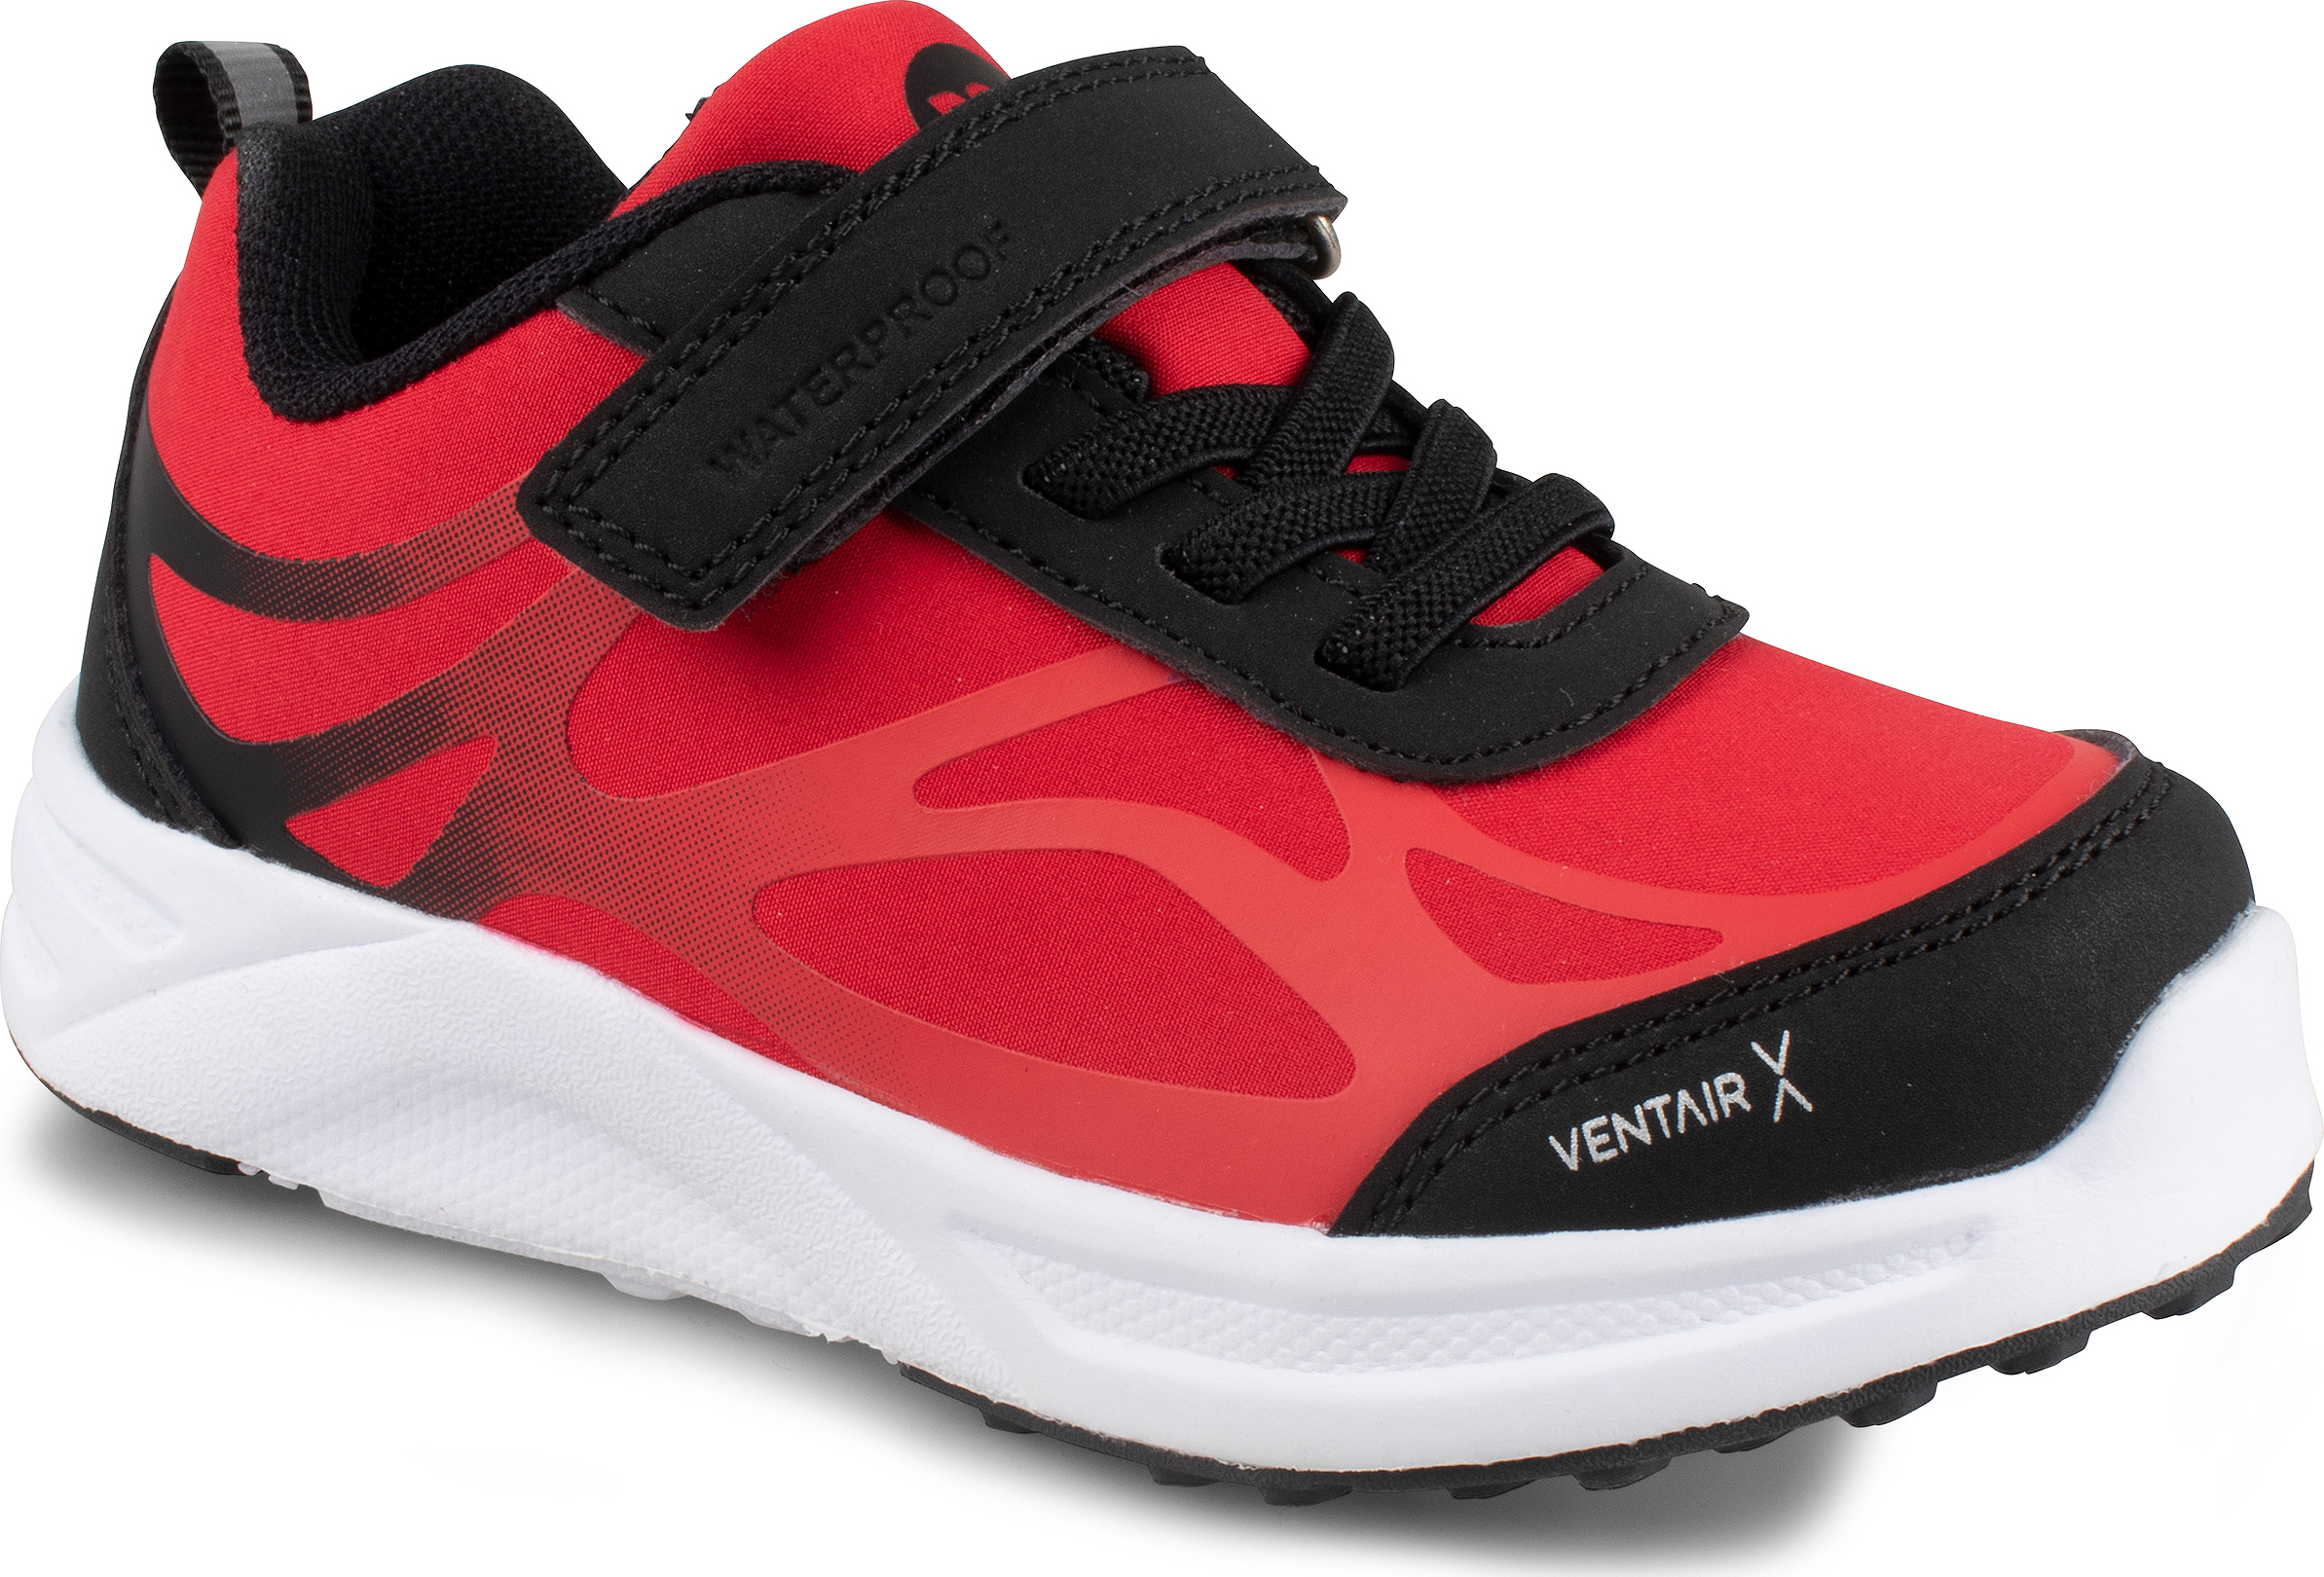 Pax Kids’ Gem Shoe Red